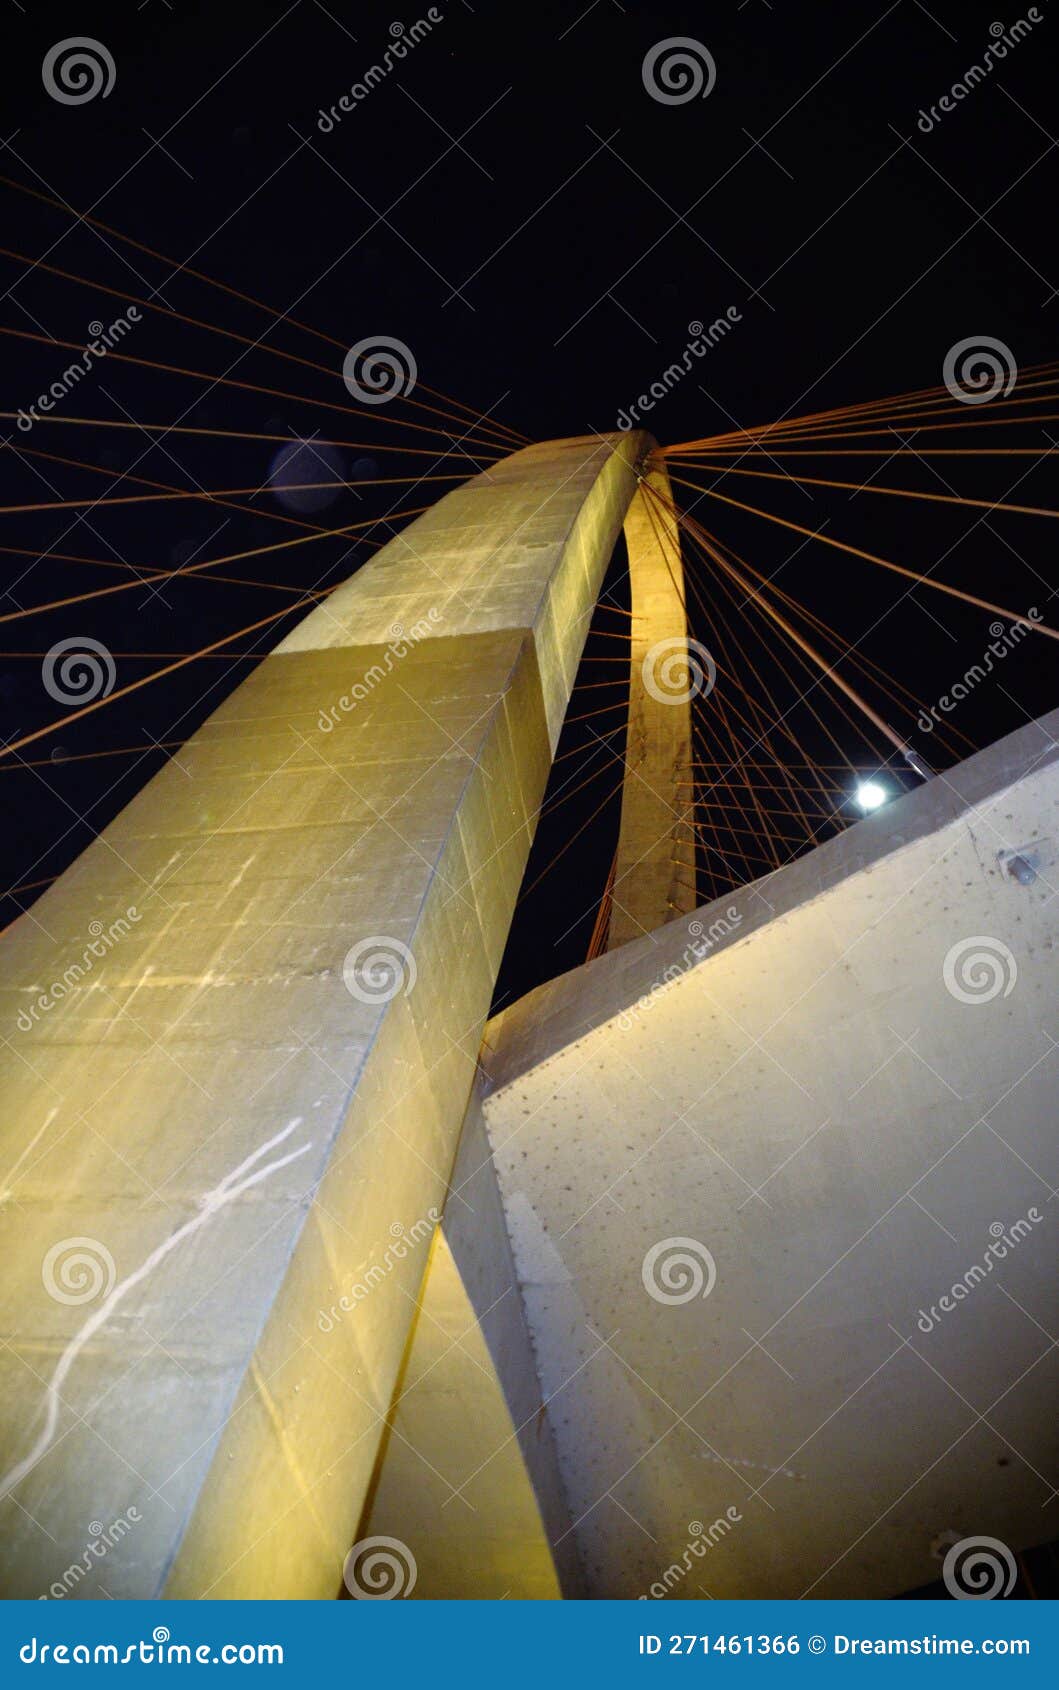 beauty of the arco da inovaÃ§Ã£o taiada bridge and its lighting